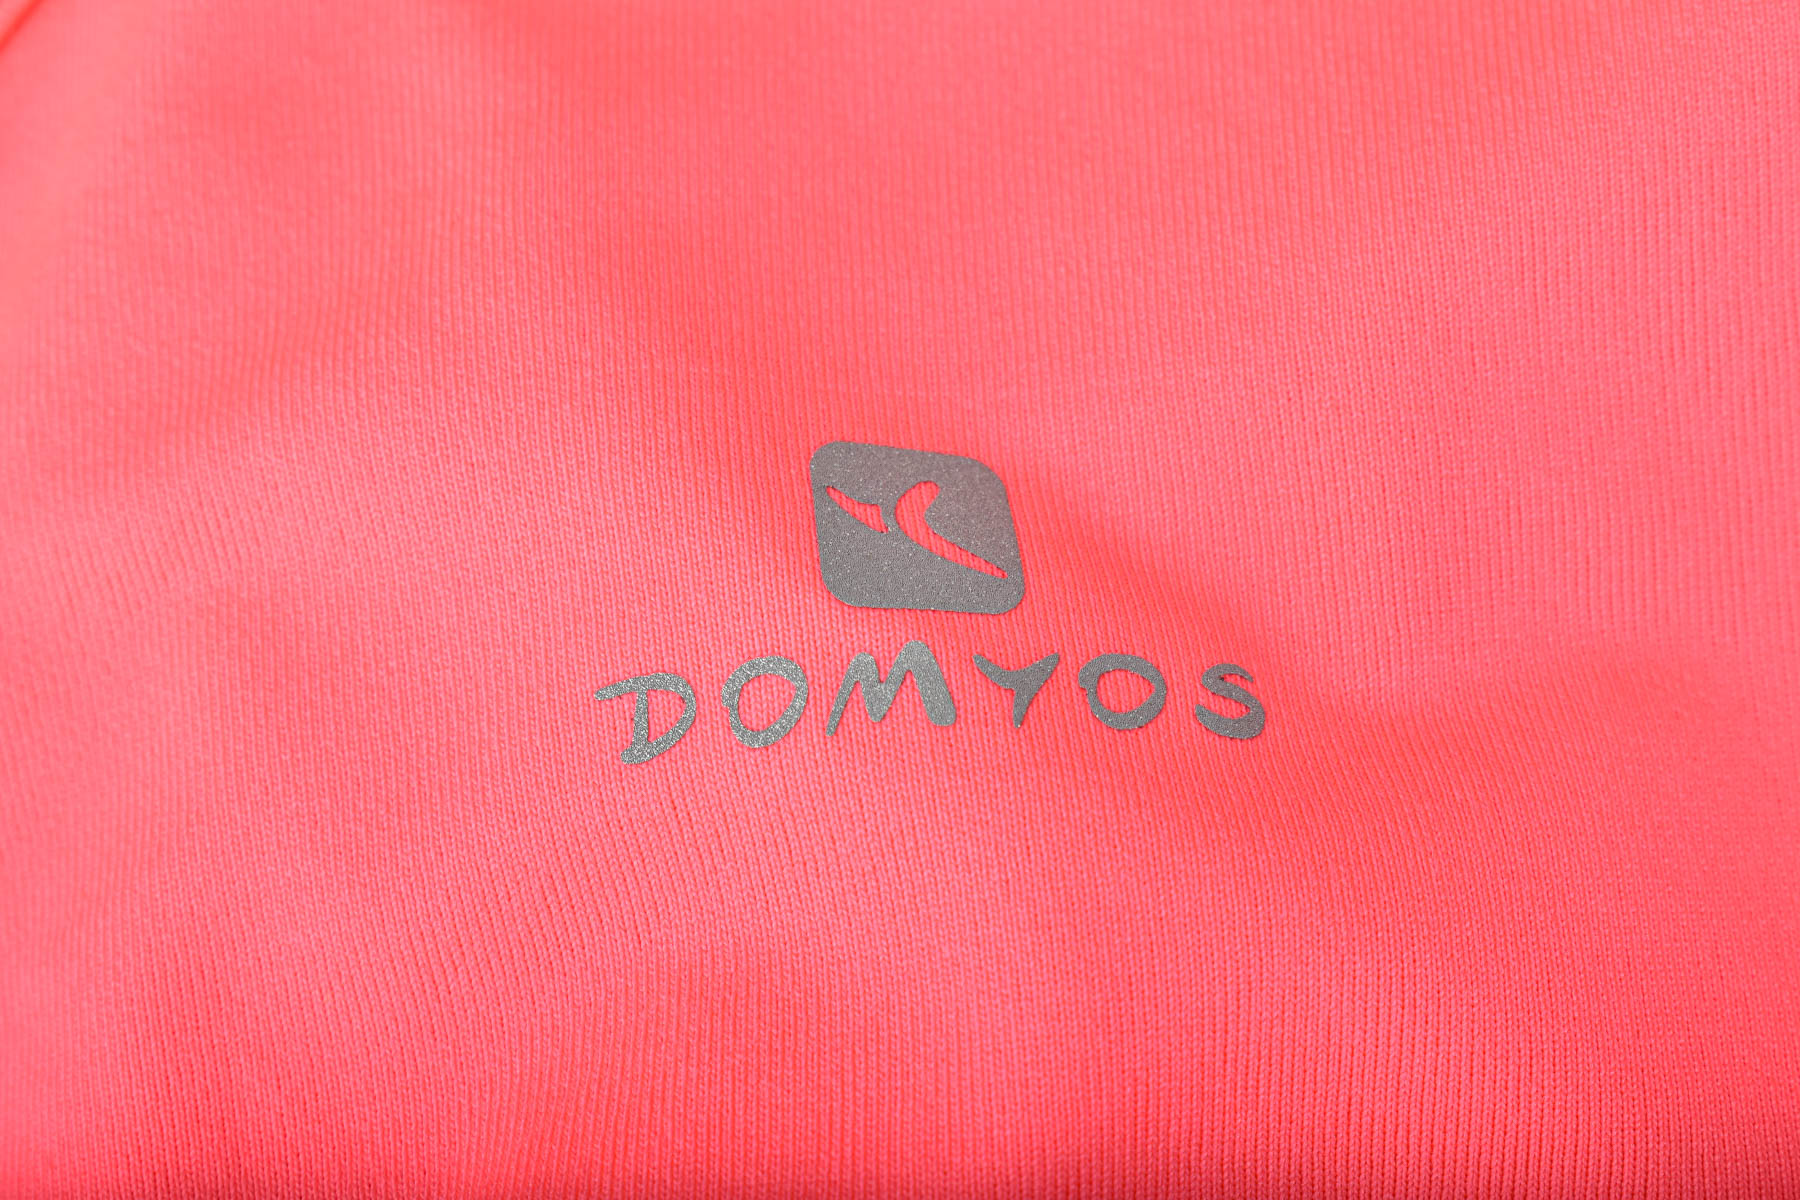 Koszulka damska - Domyos - 2